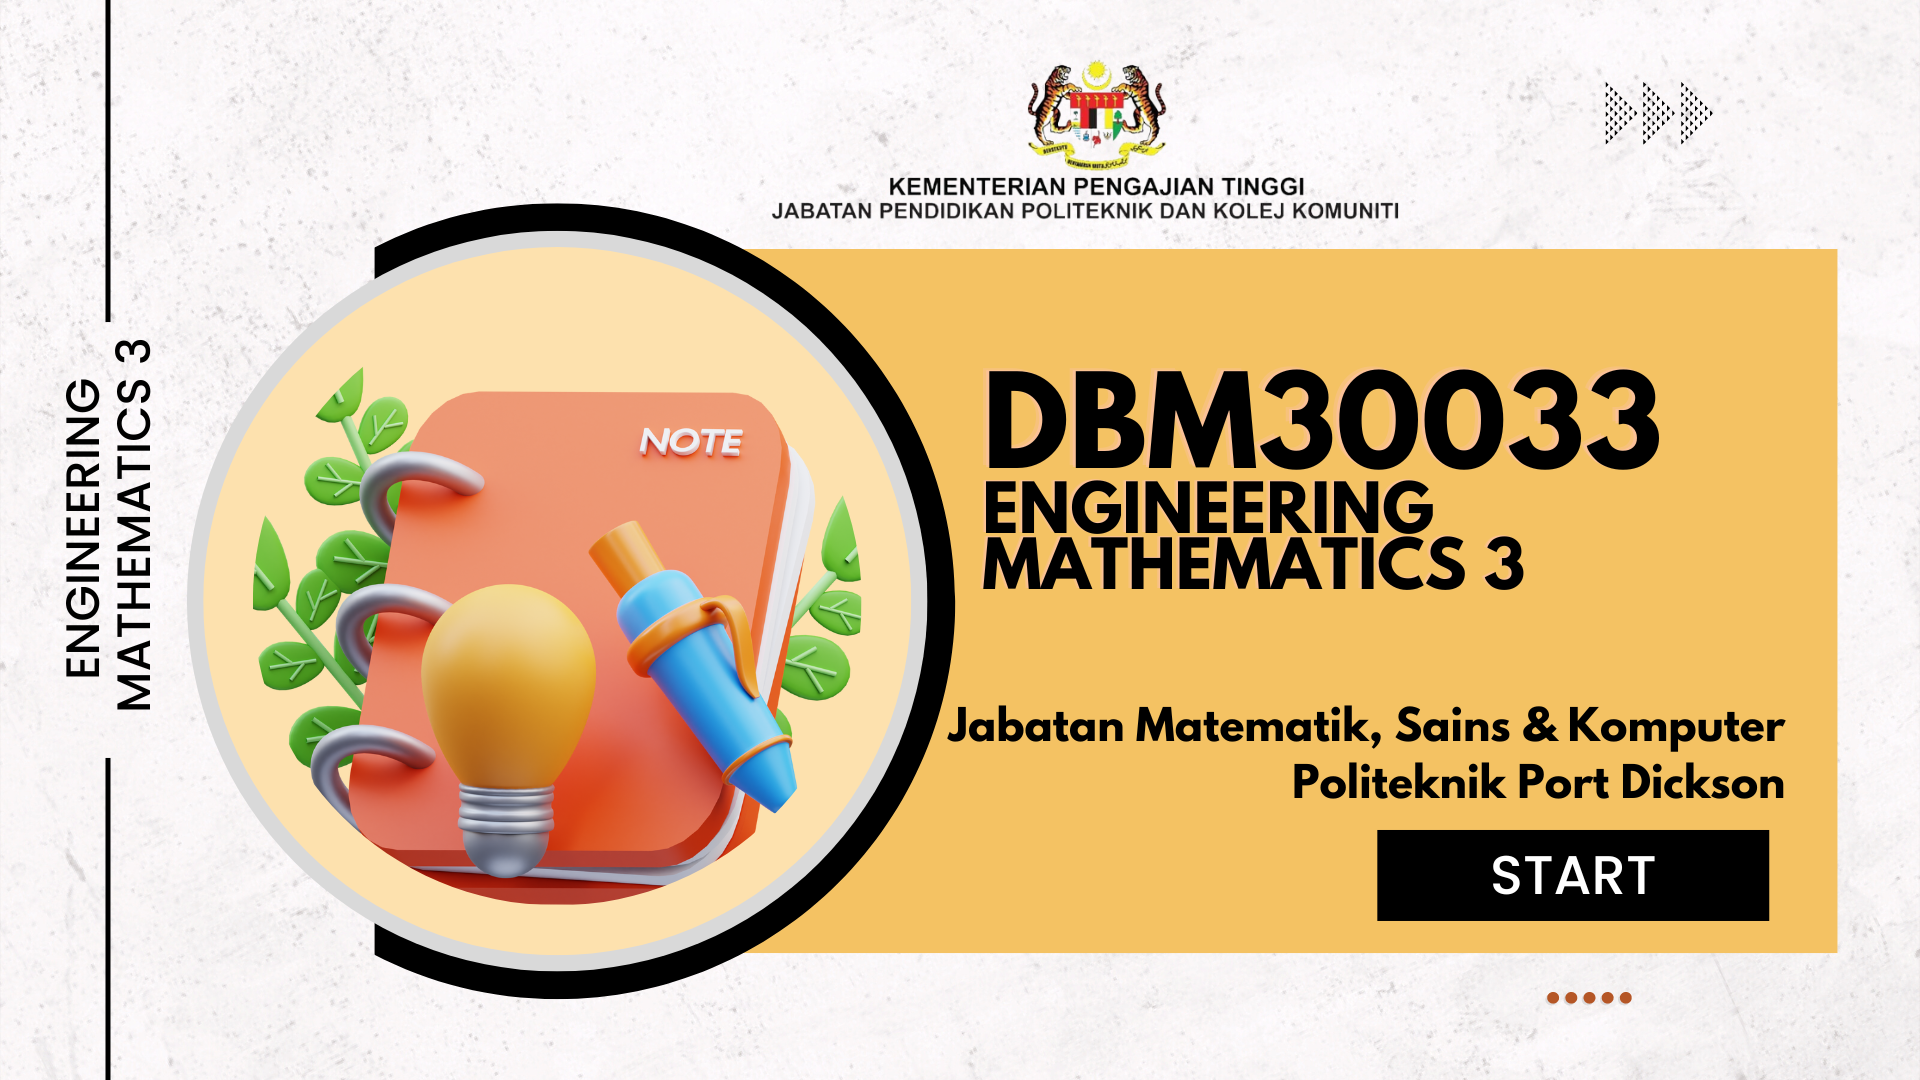 DBM30033 ENGINEERING MATHEMATICS 3